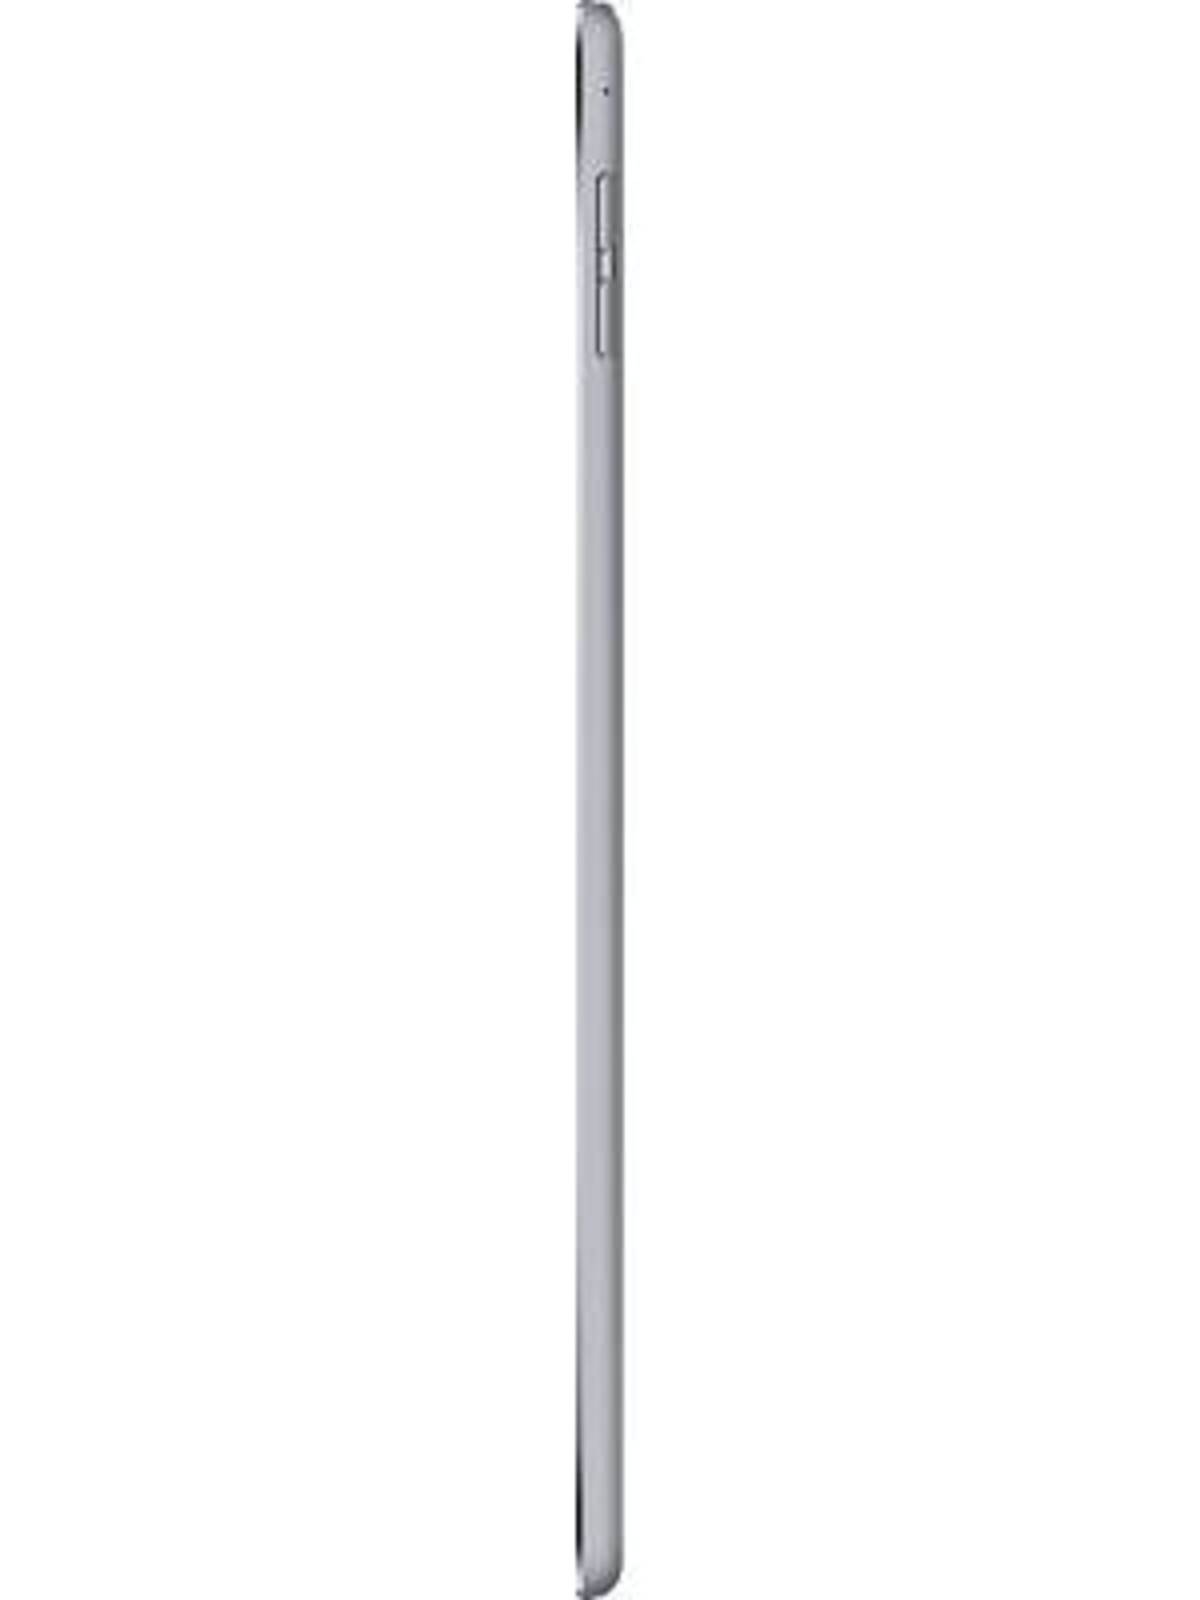 Apple iPad Mini 4 WiFi Cellular 16GB